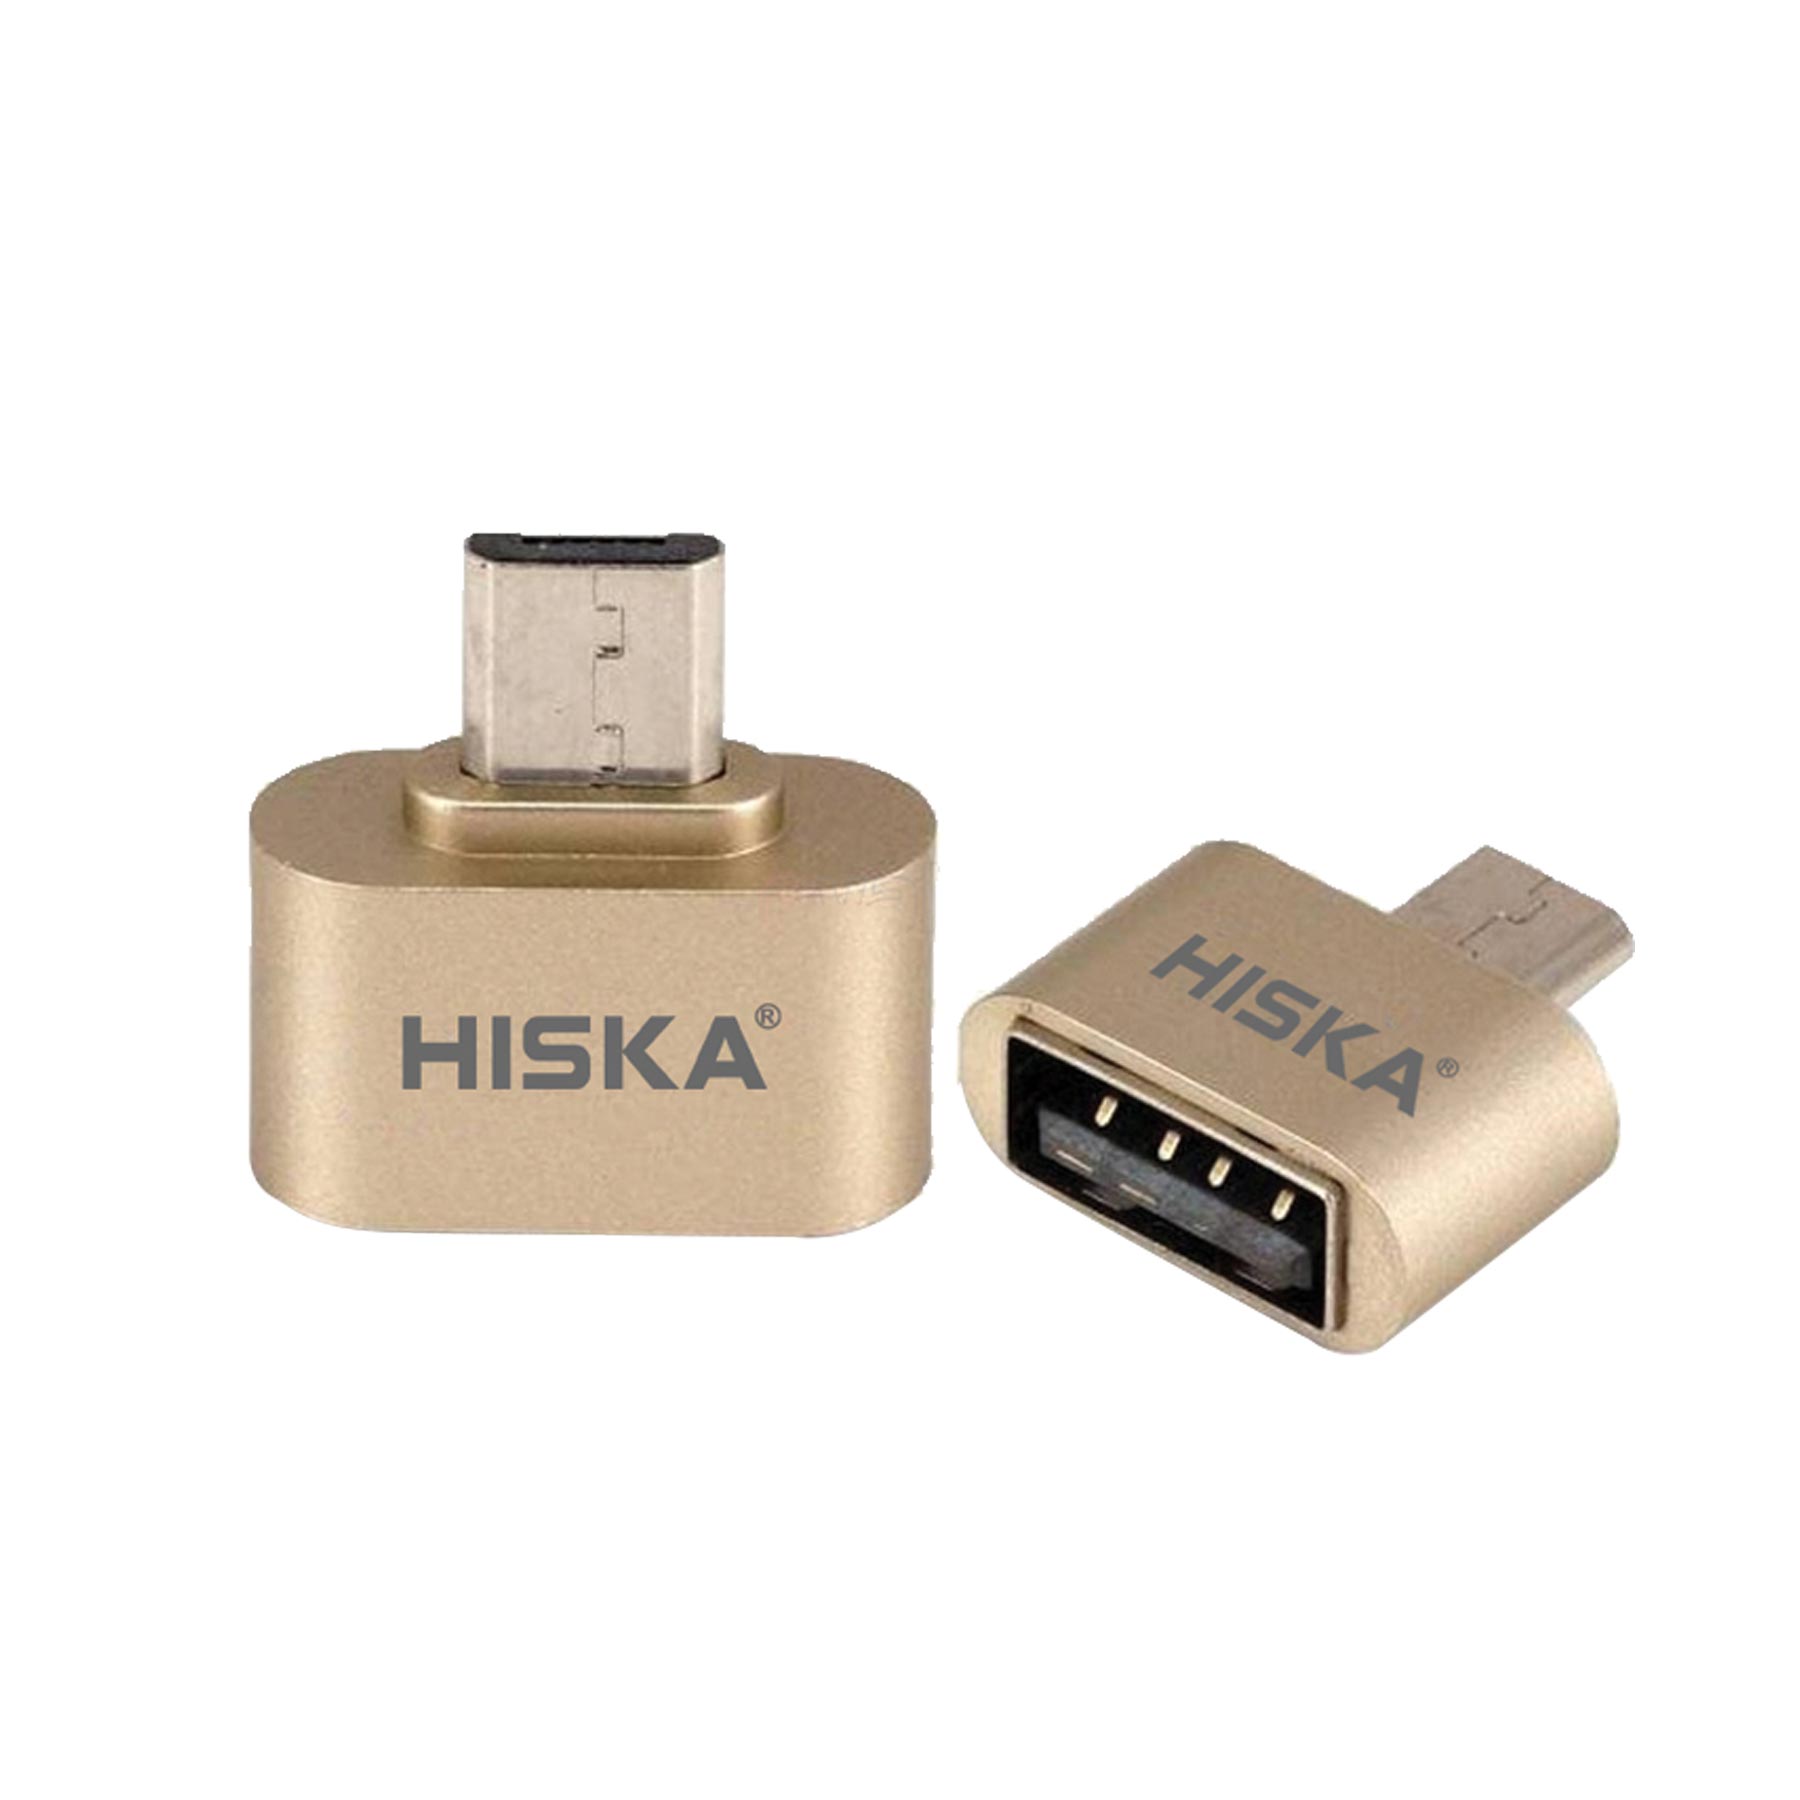 Hiska Series 8 مبدل Usb به Micro Usb مدل OT-02